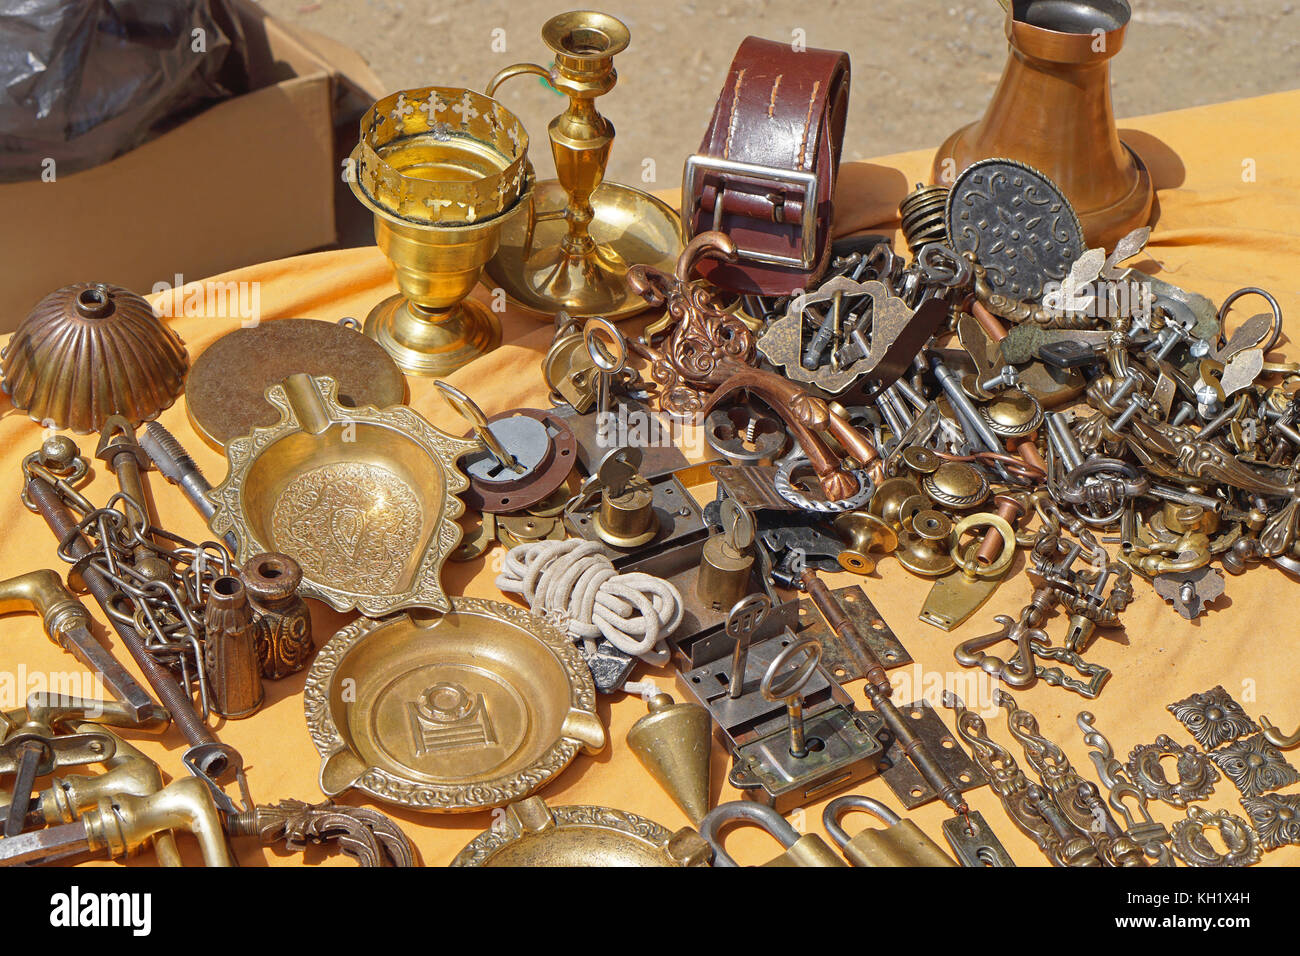 138 Male Brass Pvc Images, Stock Photos, 3D objects, & Vectors